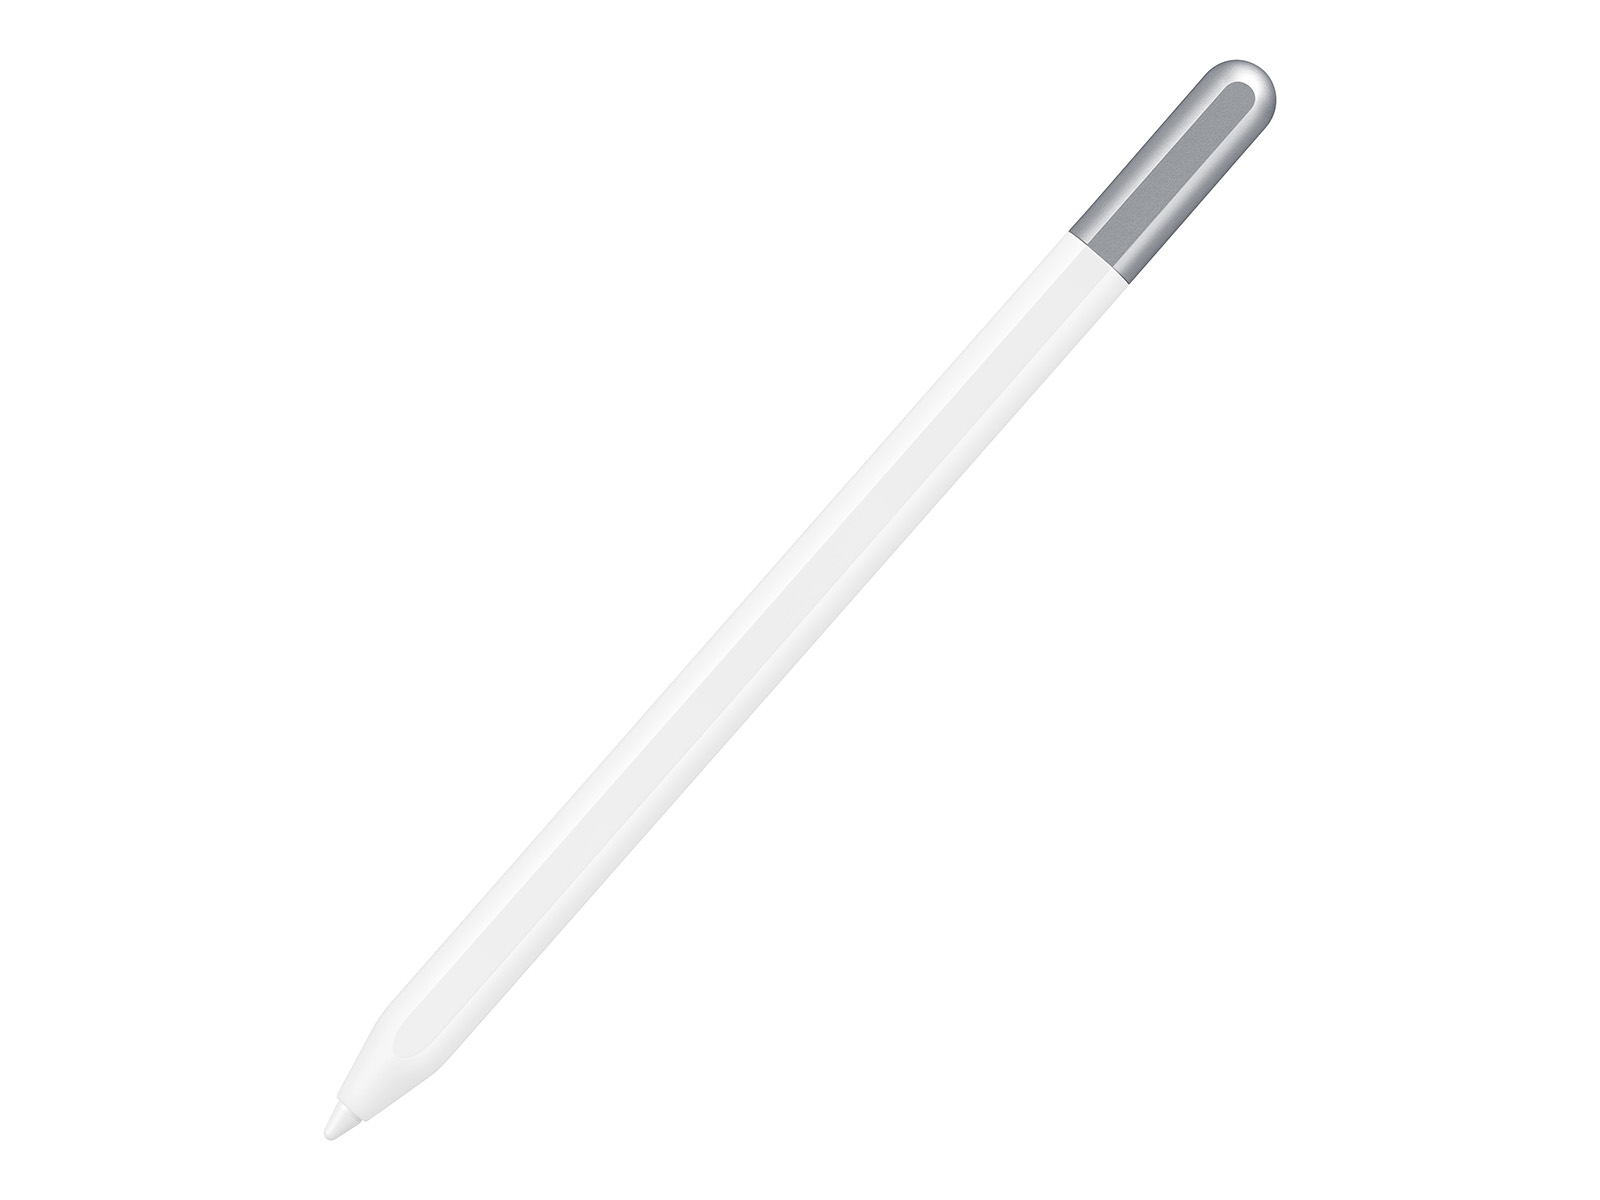 Galaxy S Pen Creator Edition Mobile Accessories - EJ-P5600SWEGUS